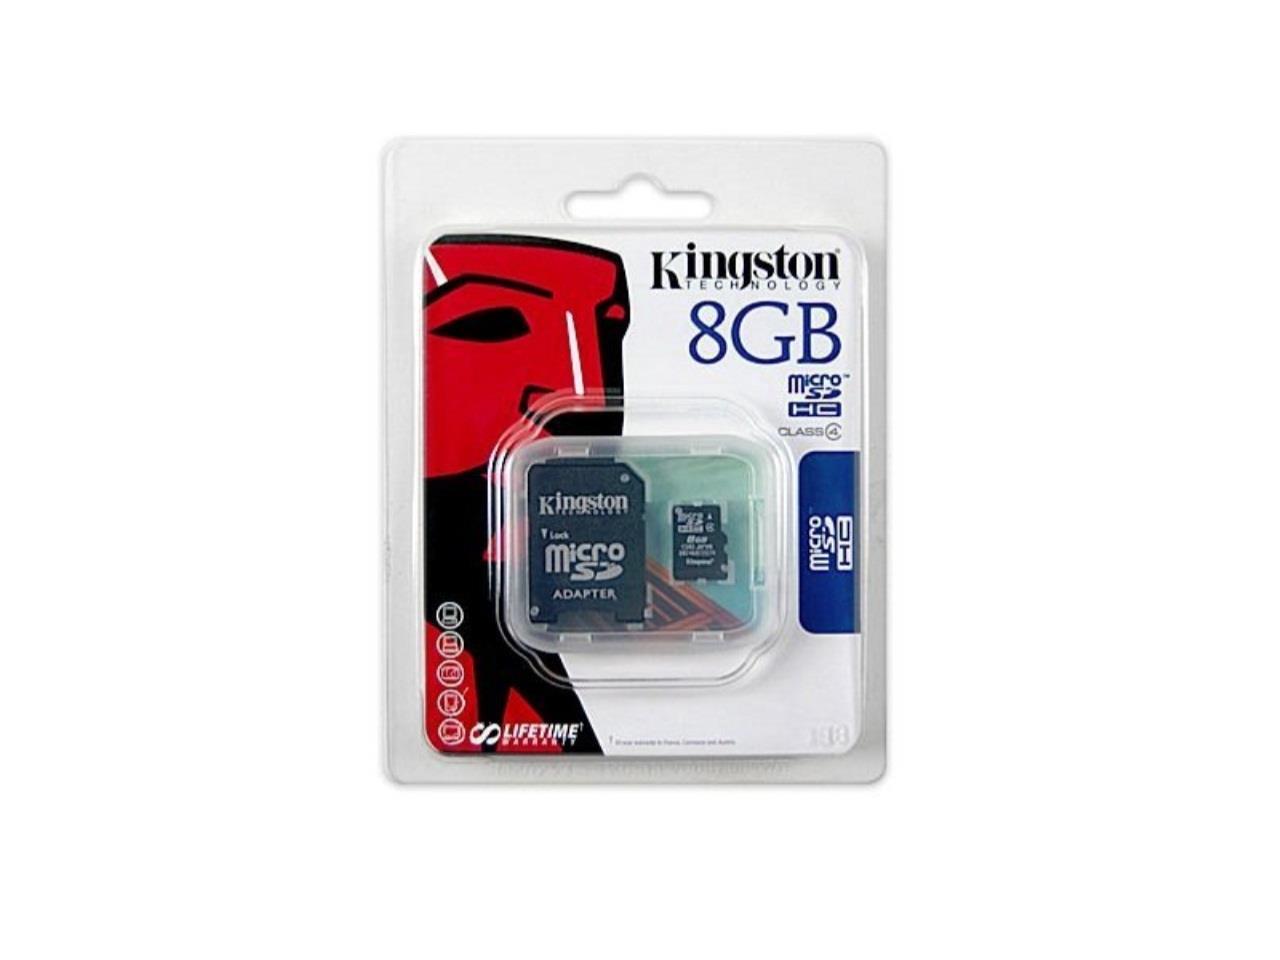 8gb microsd memory card for samsung a777 phone sgh777 - Newegg.com